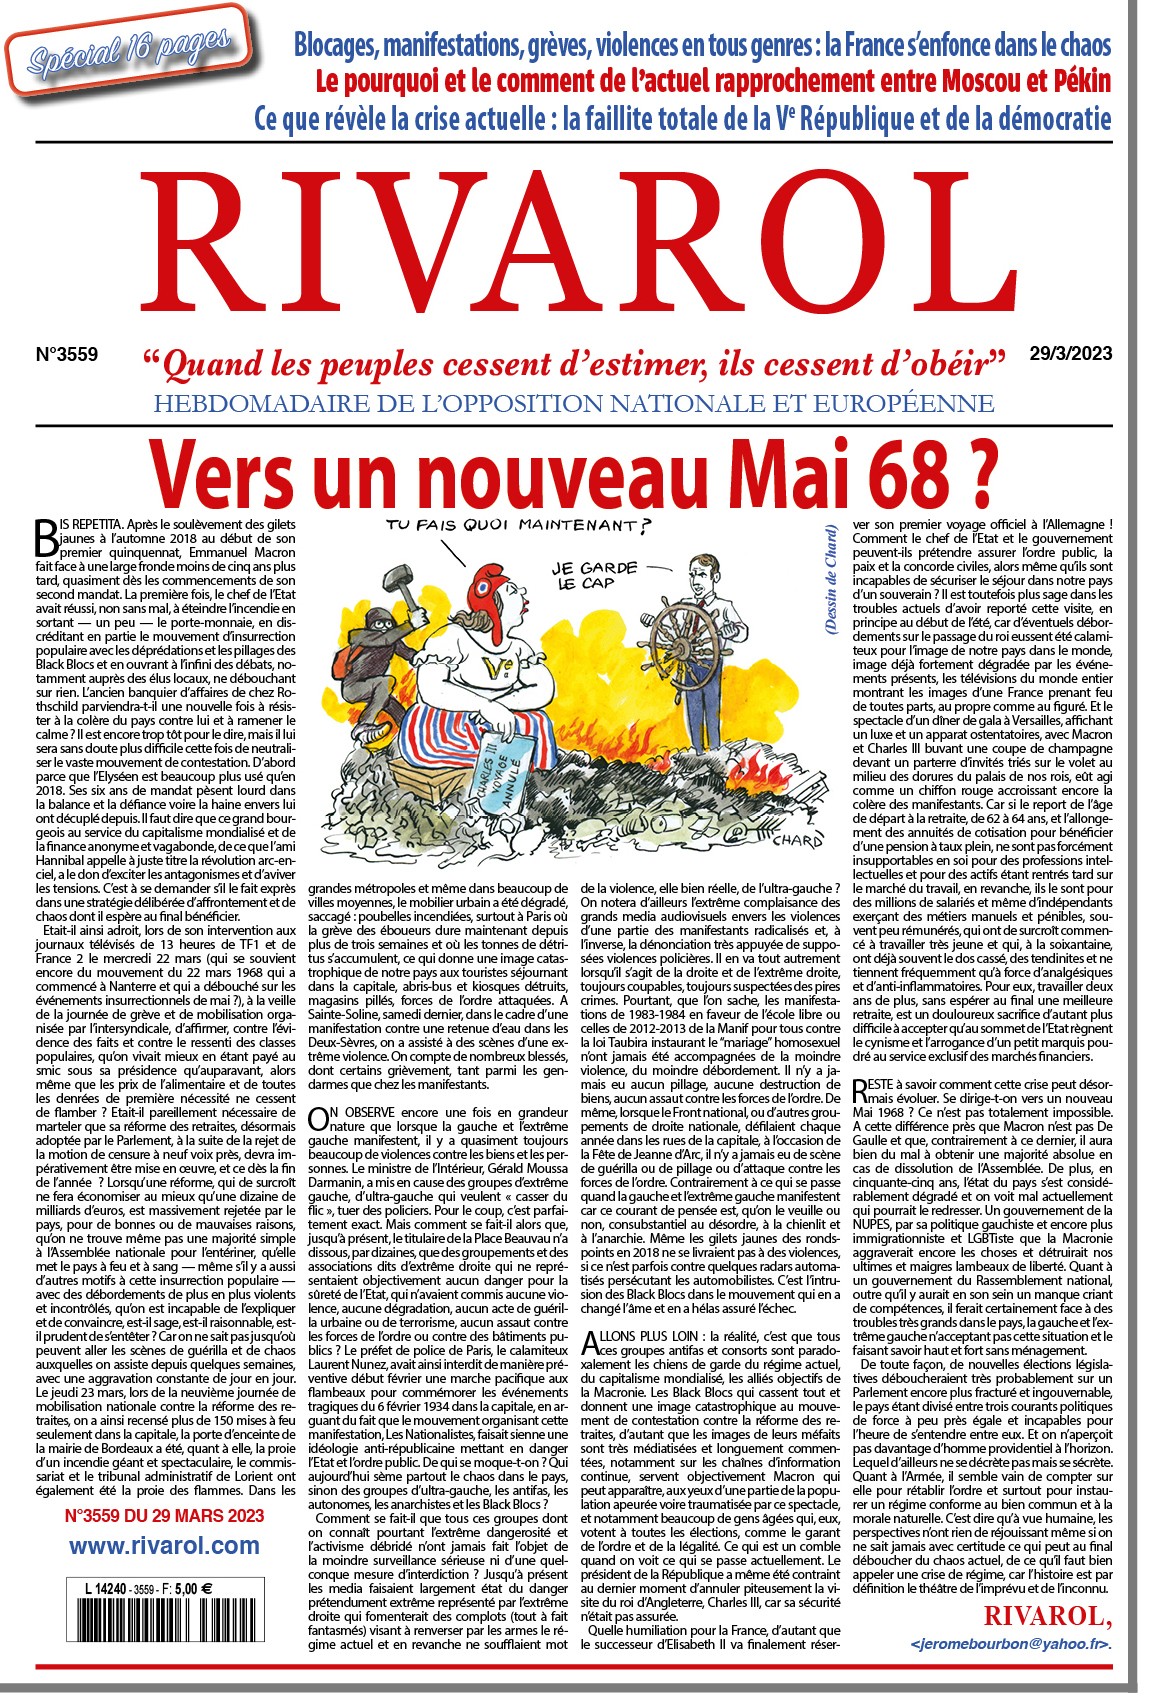 Rivarol n°3559 du 29/3/2023